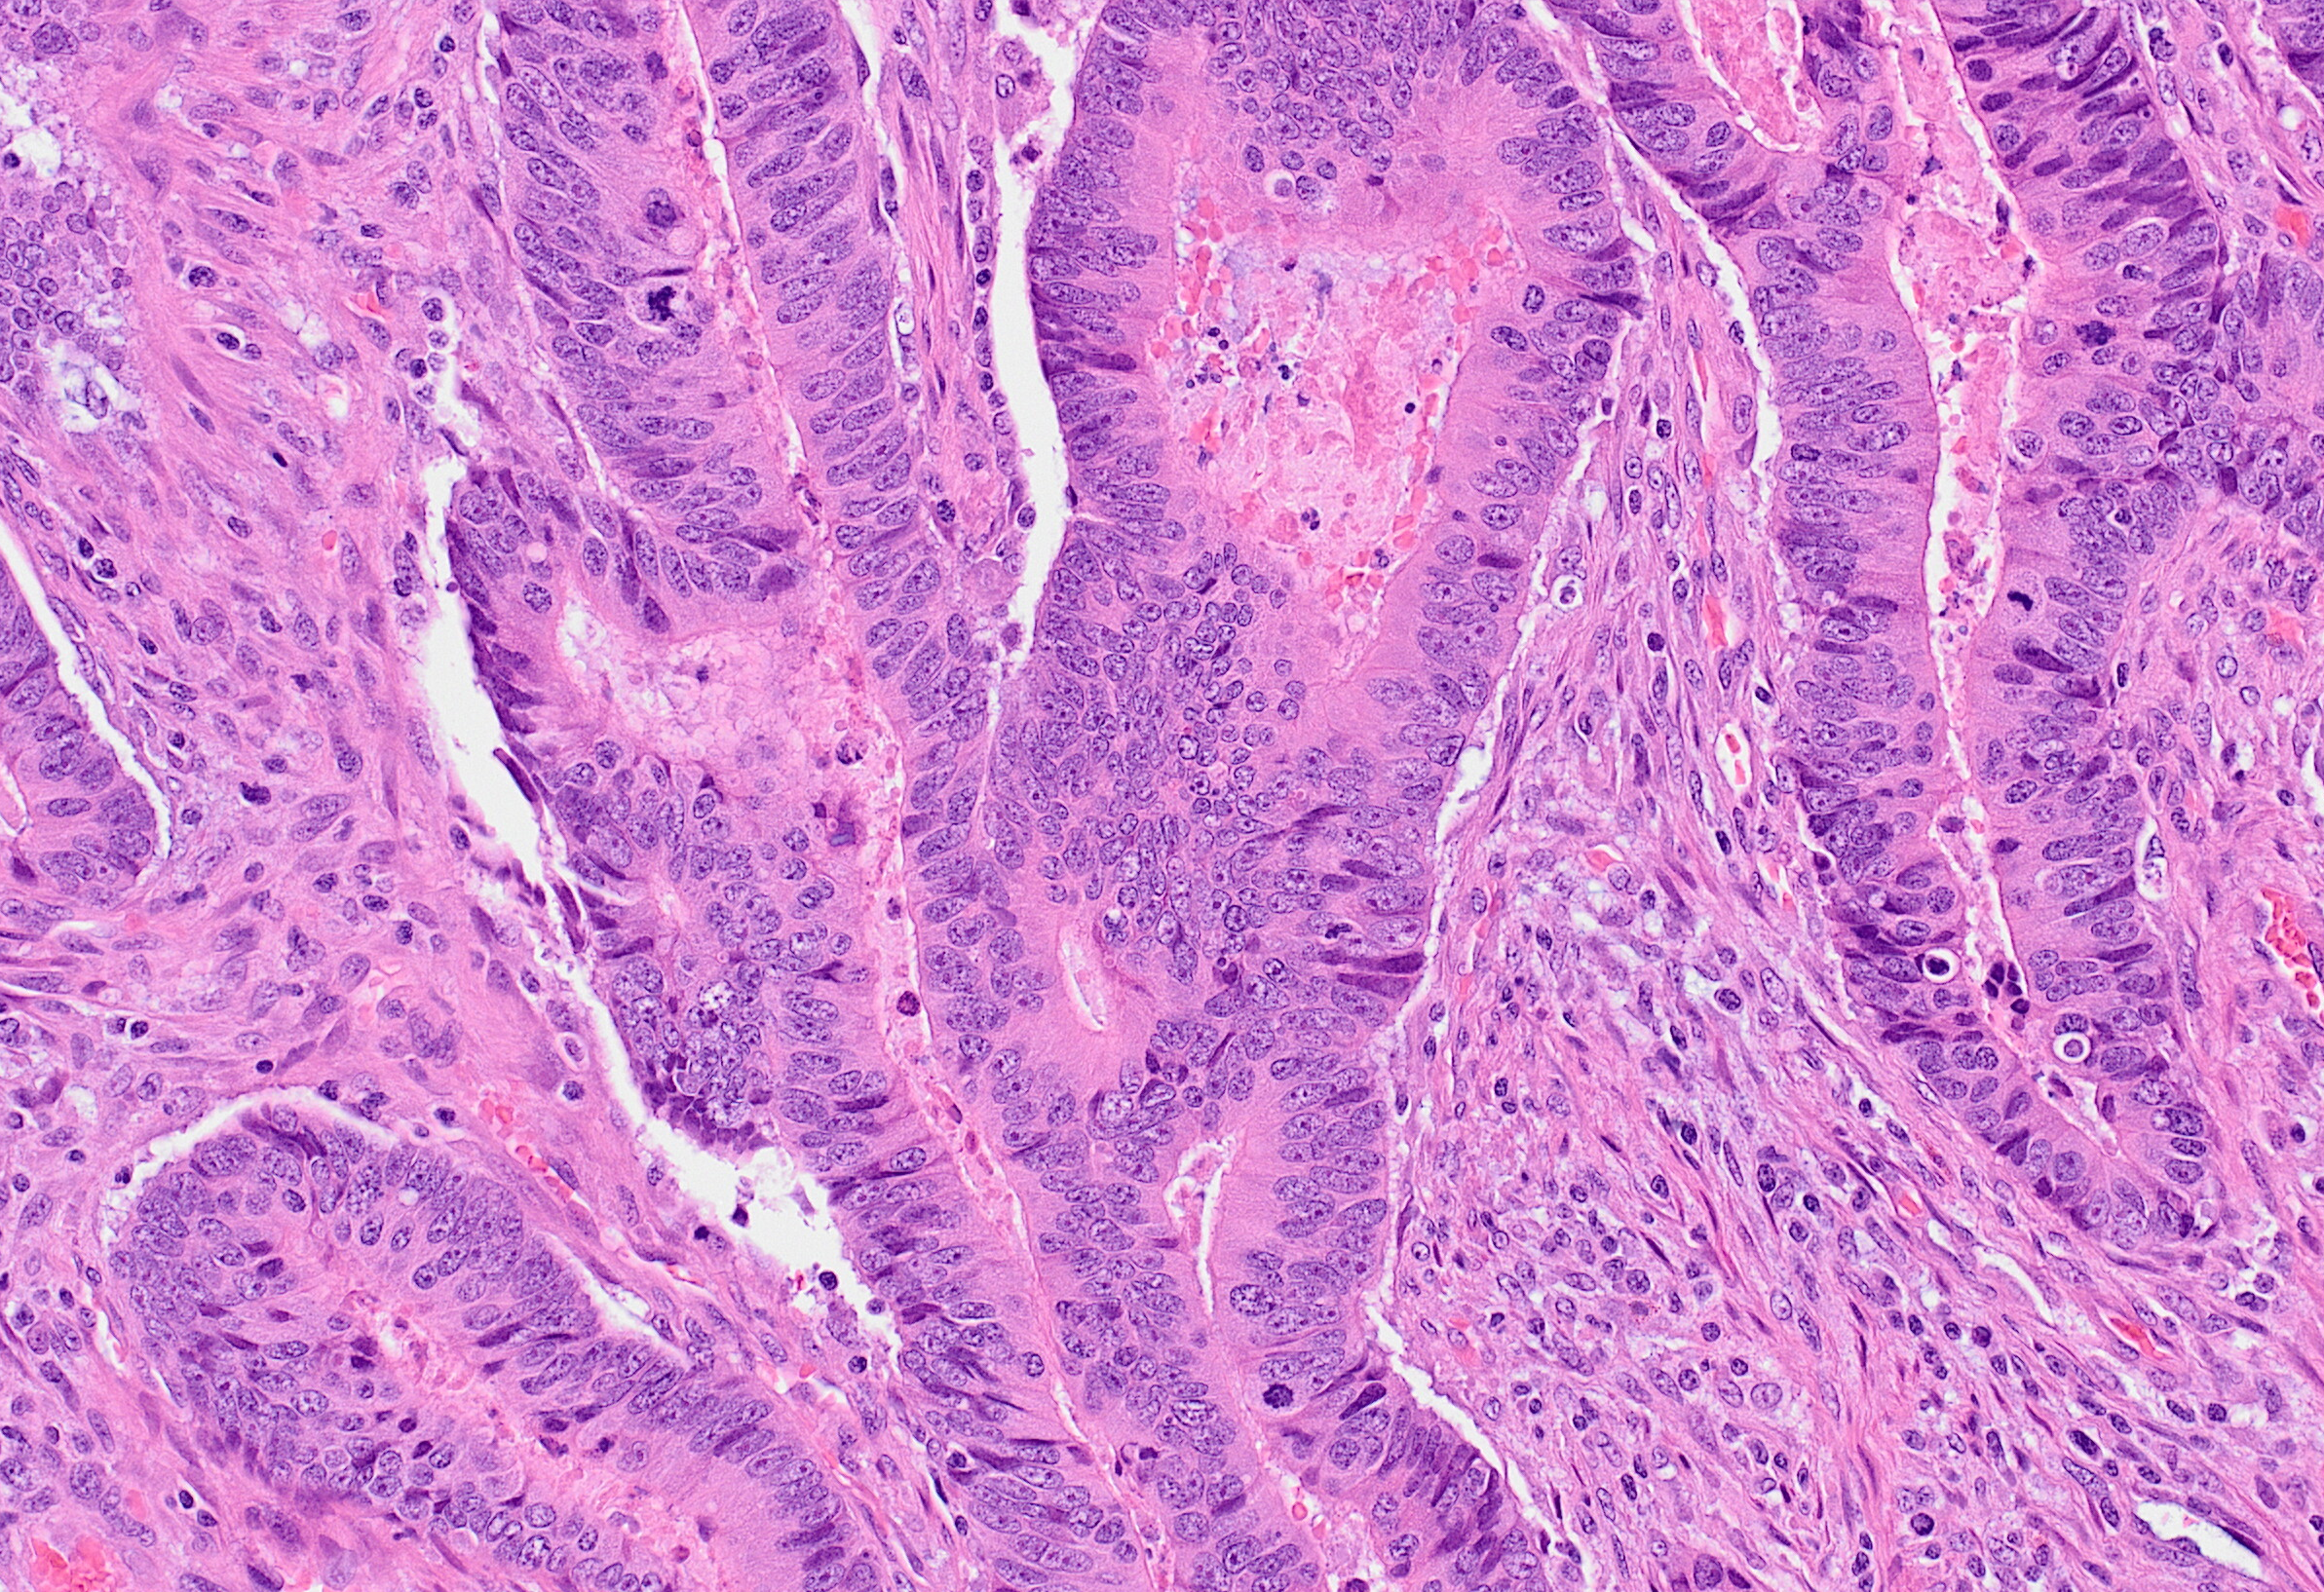 This typical colon adenocarcinoma demonstrates irregular, malignant glands set in desmoplastic stroma.